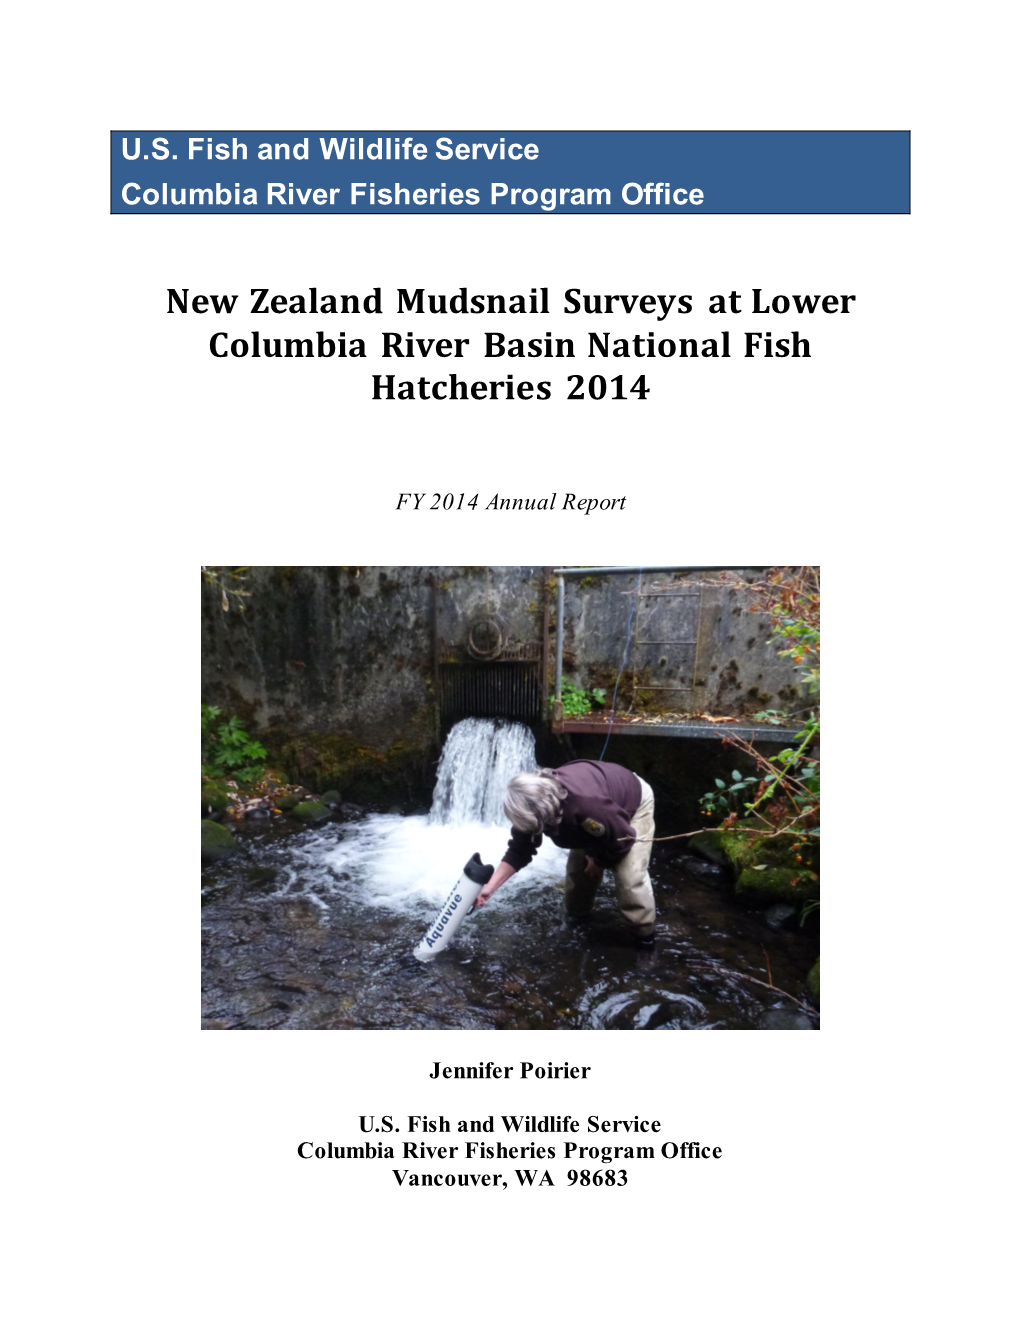 New Zealand Mudsnail Surveys at Lower Columbia River Basin National Fish Hatcheries 2014